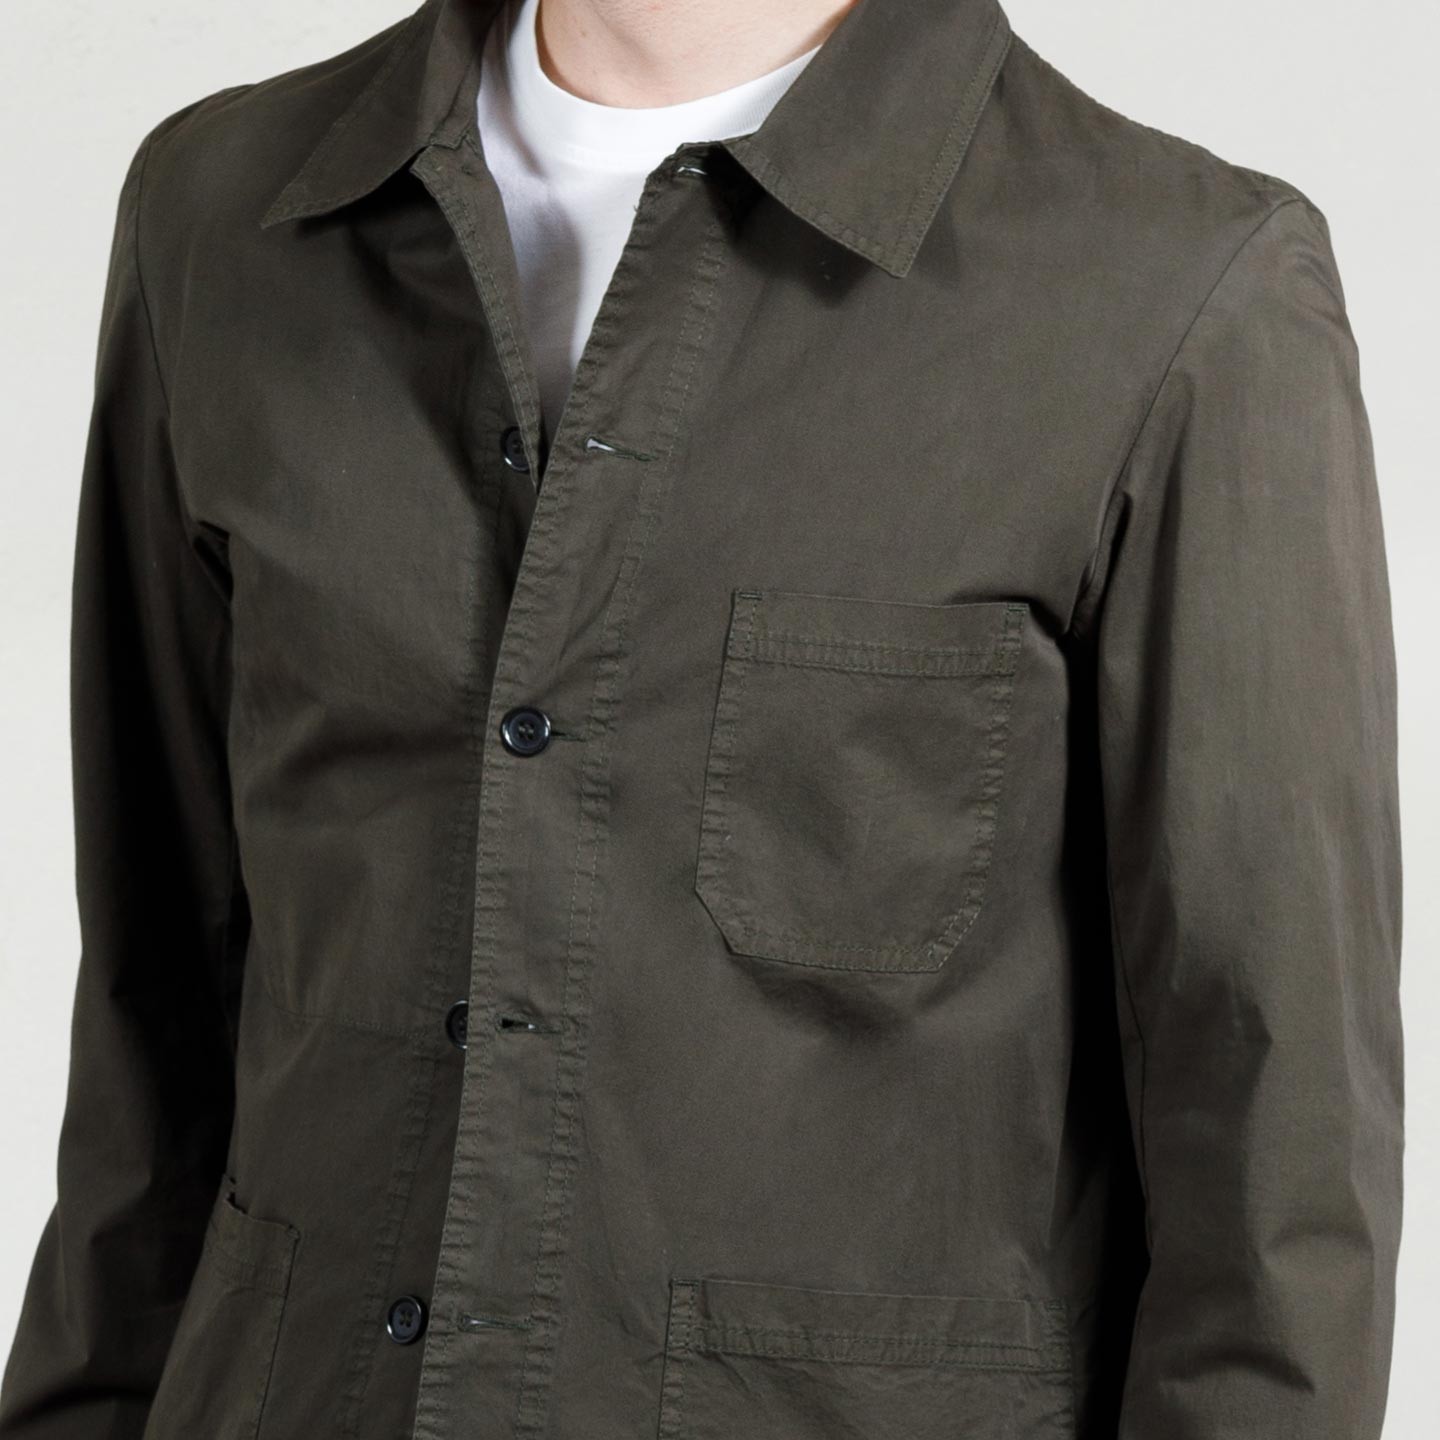 Workwear Jacket in light canvas 4N/5 VETRA khaki